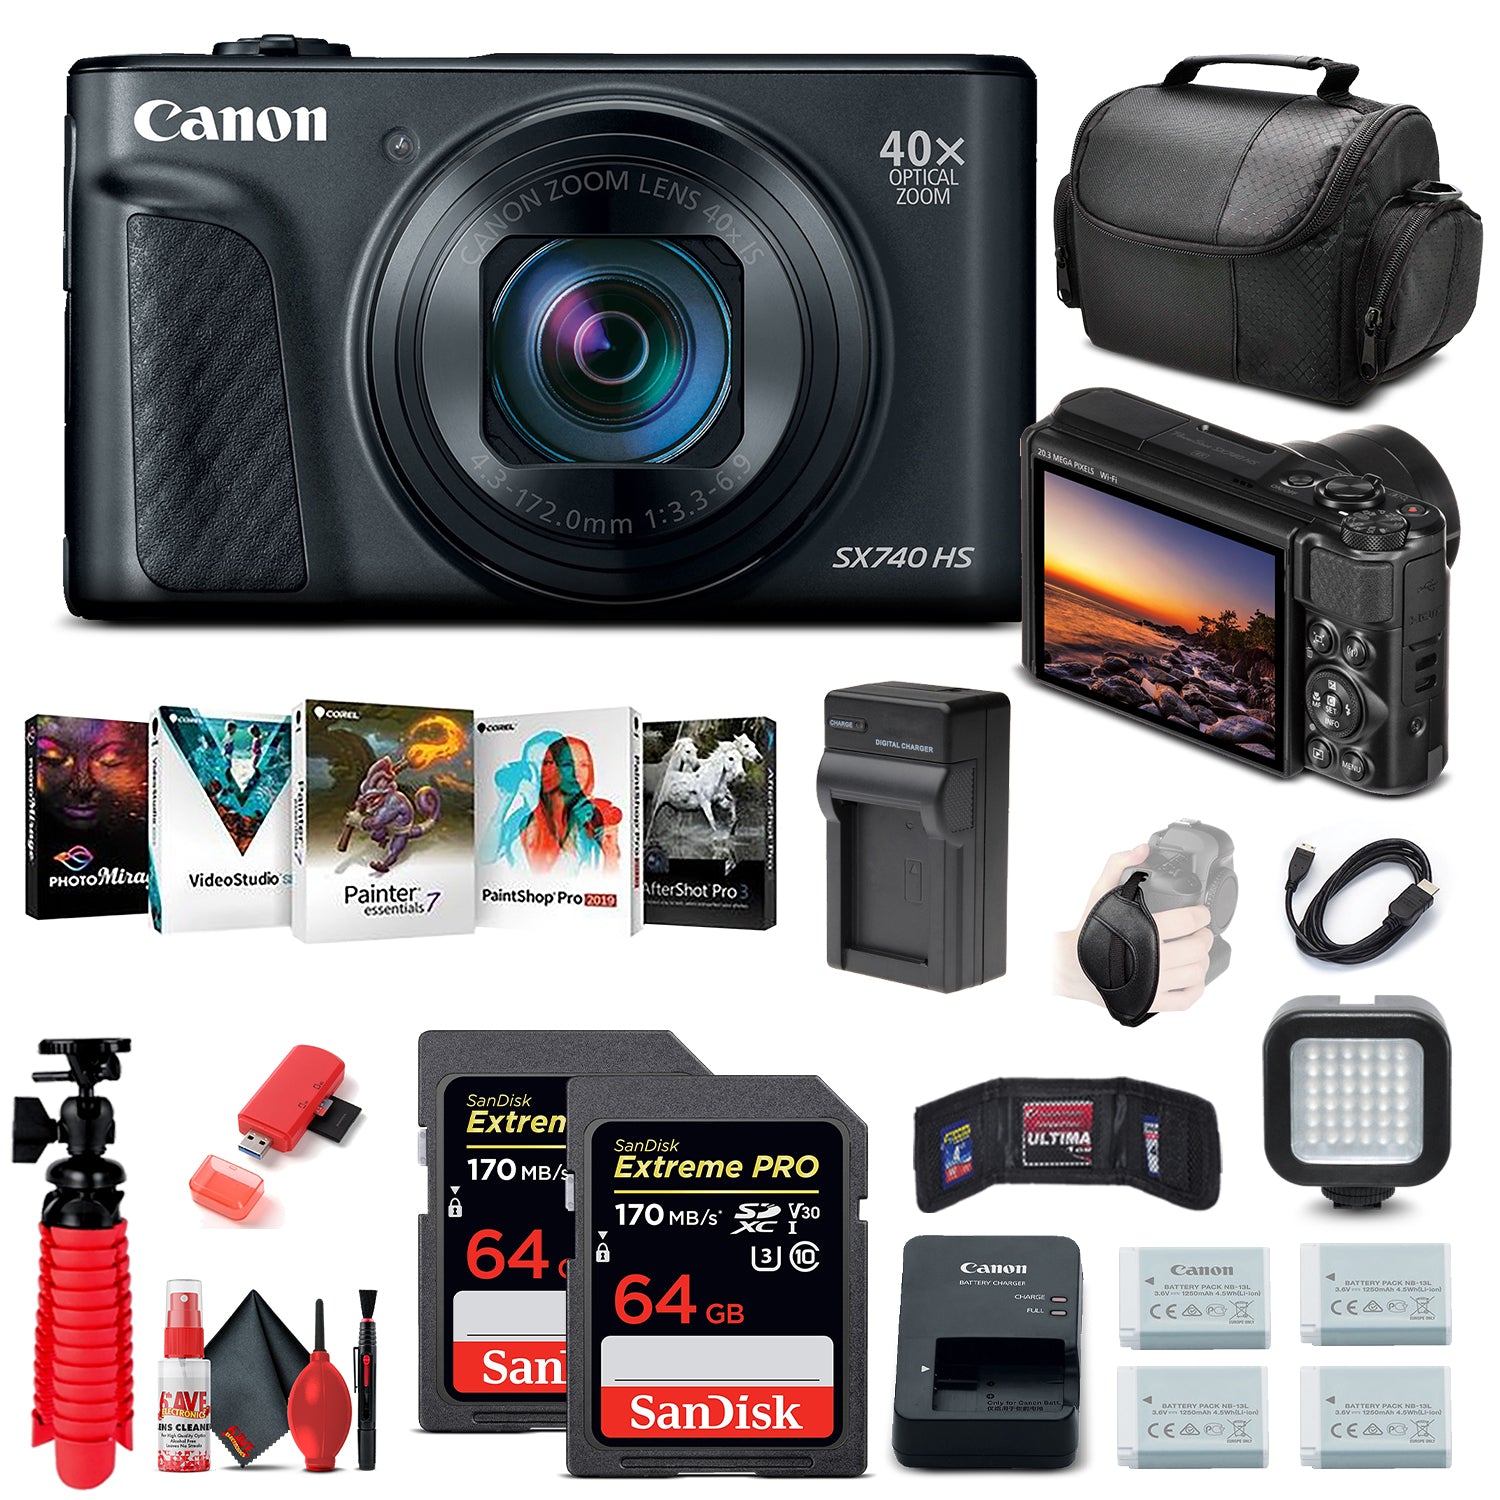 Canon PowerShot SX740 HS Digital Camera (Black) (2955C001) + 64GB Card Advanced Bundle